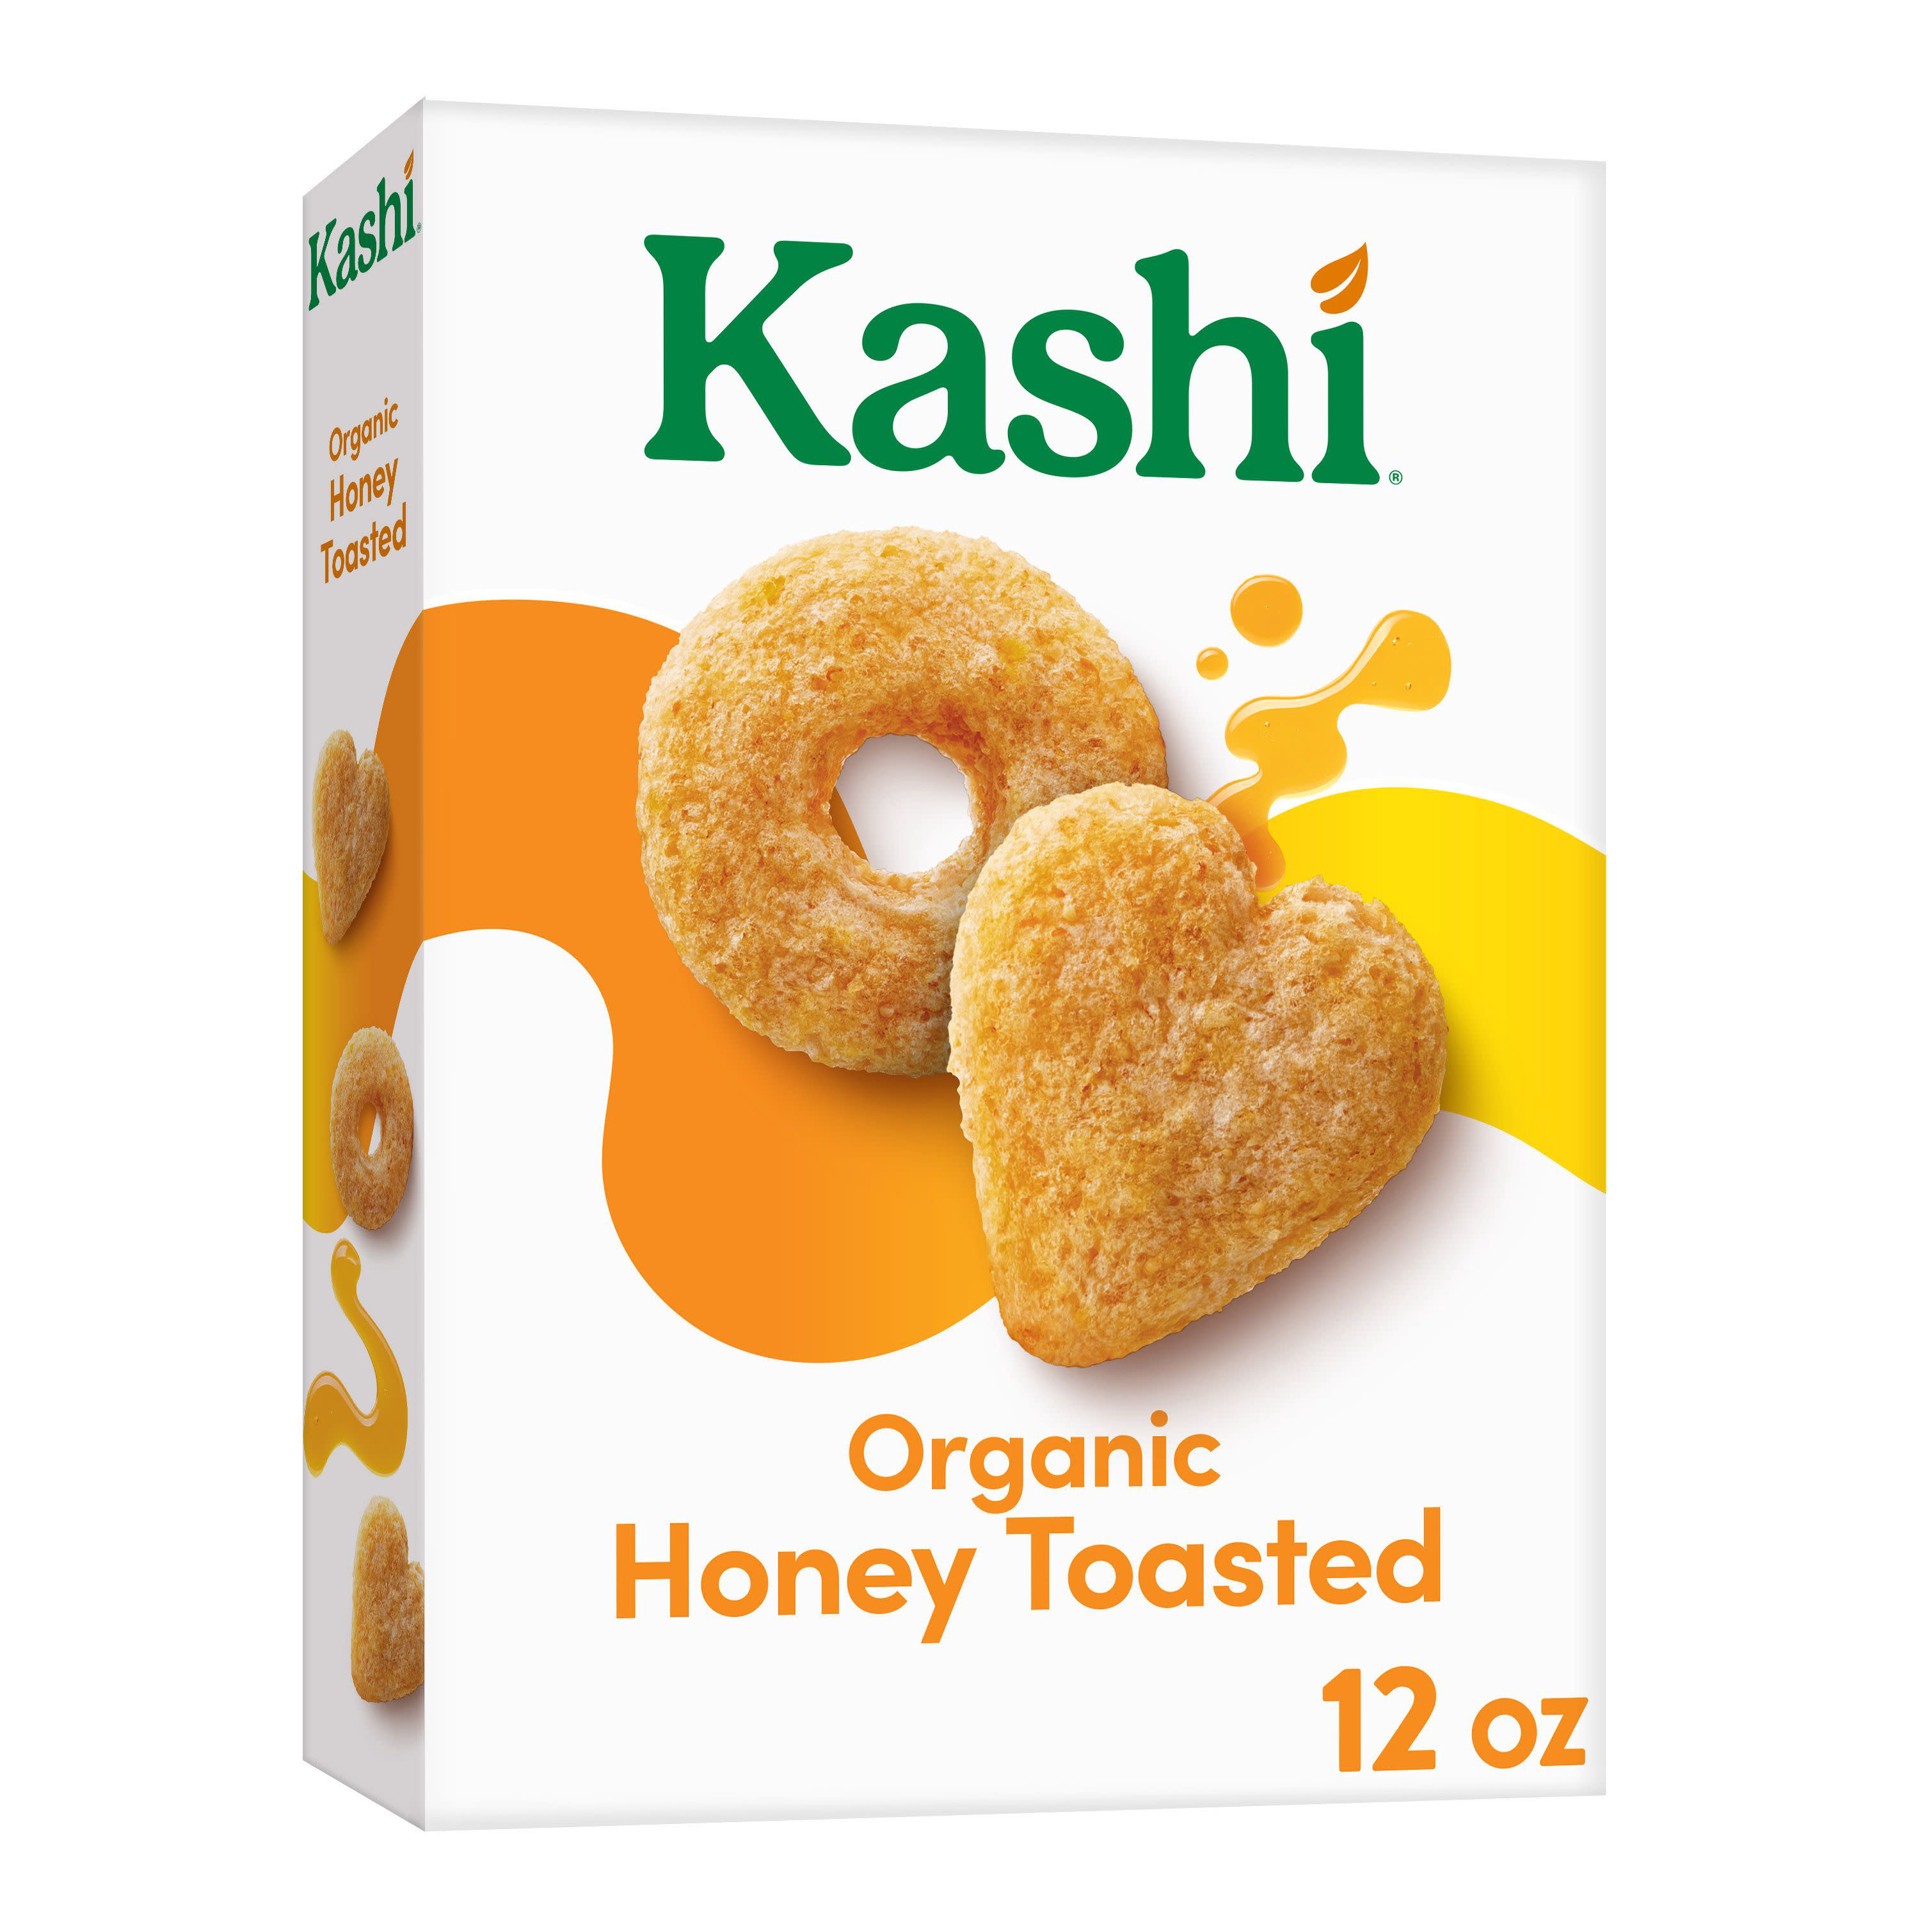 slide 1 of 5, Kashi Breakfast Cereal, Family Breakfast, Organic Fiber Cereal, Honey Toasted, 12oz Box, 1 Box, 12 oz